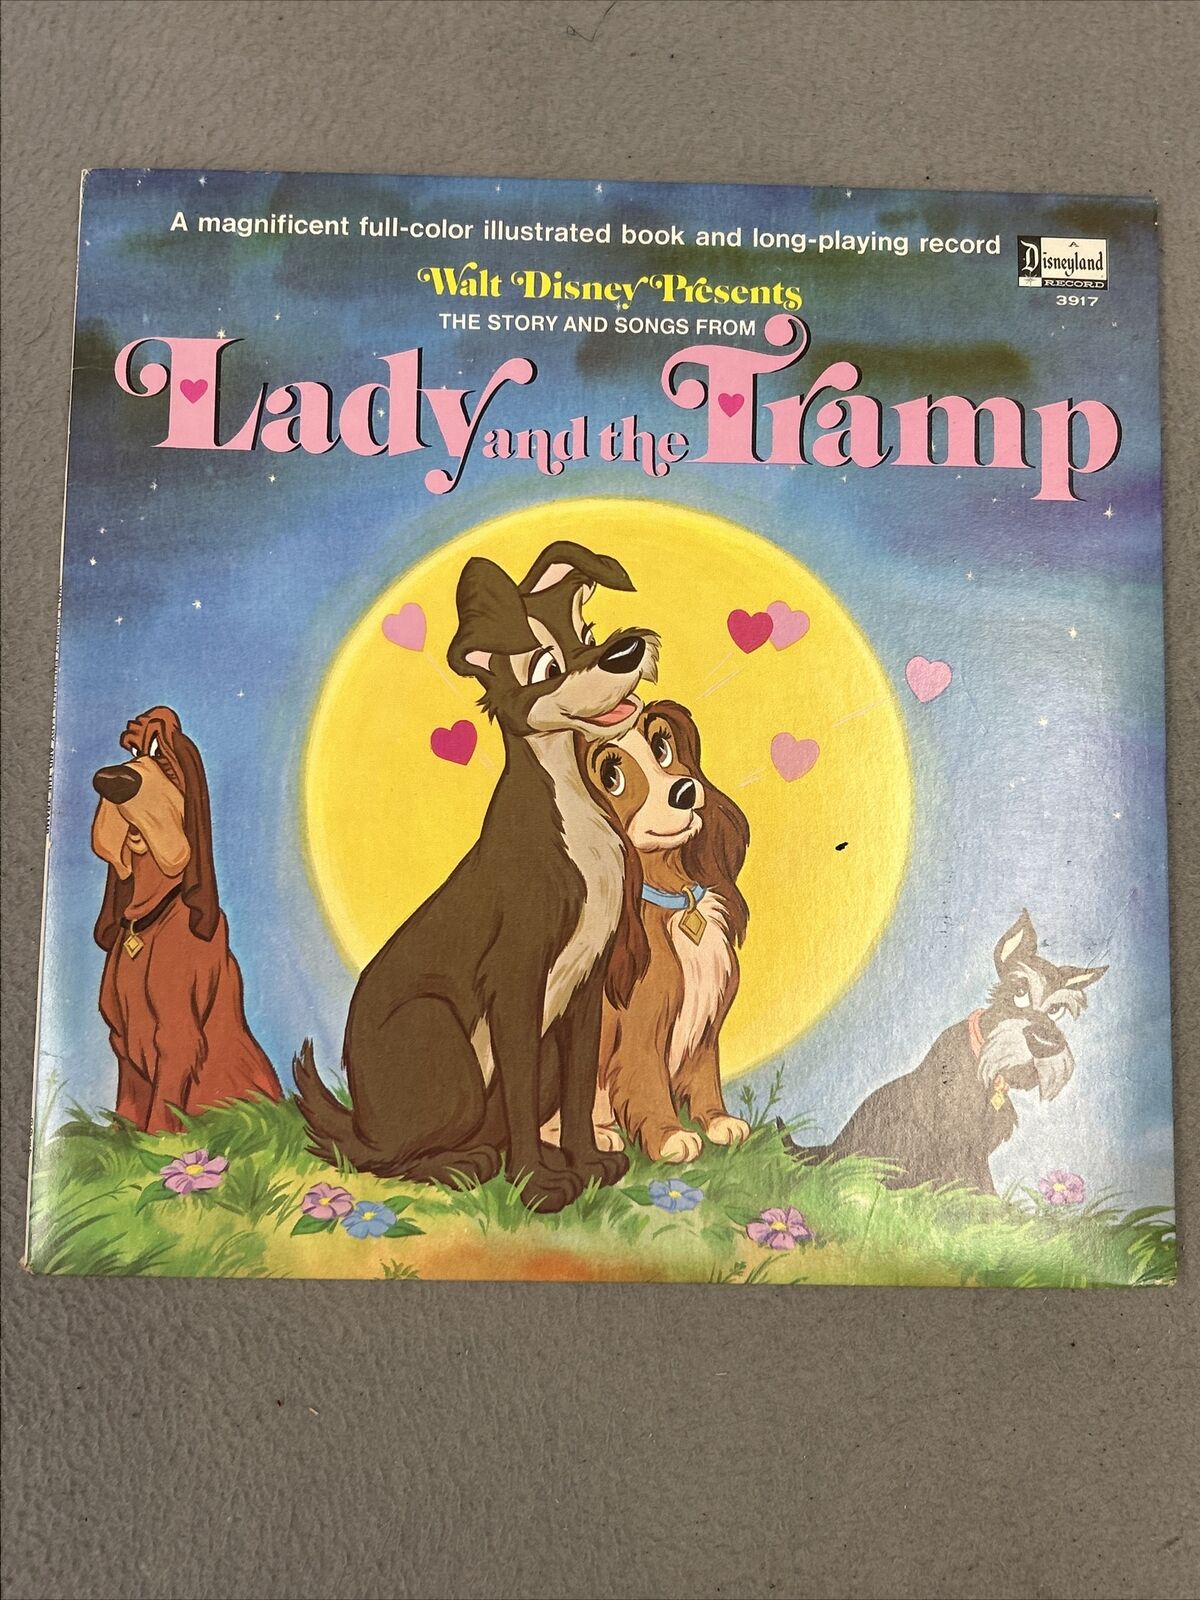 Lady And The Tramp Vinyl Record & Book Disneyland Disney Vintage 1969 3917 Songs